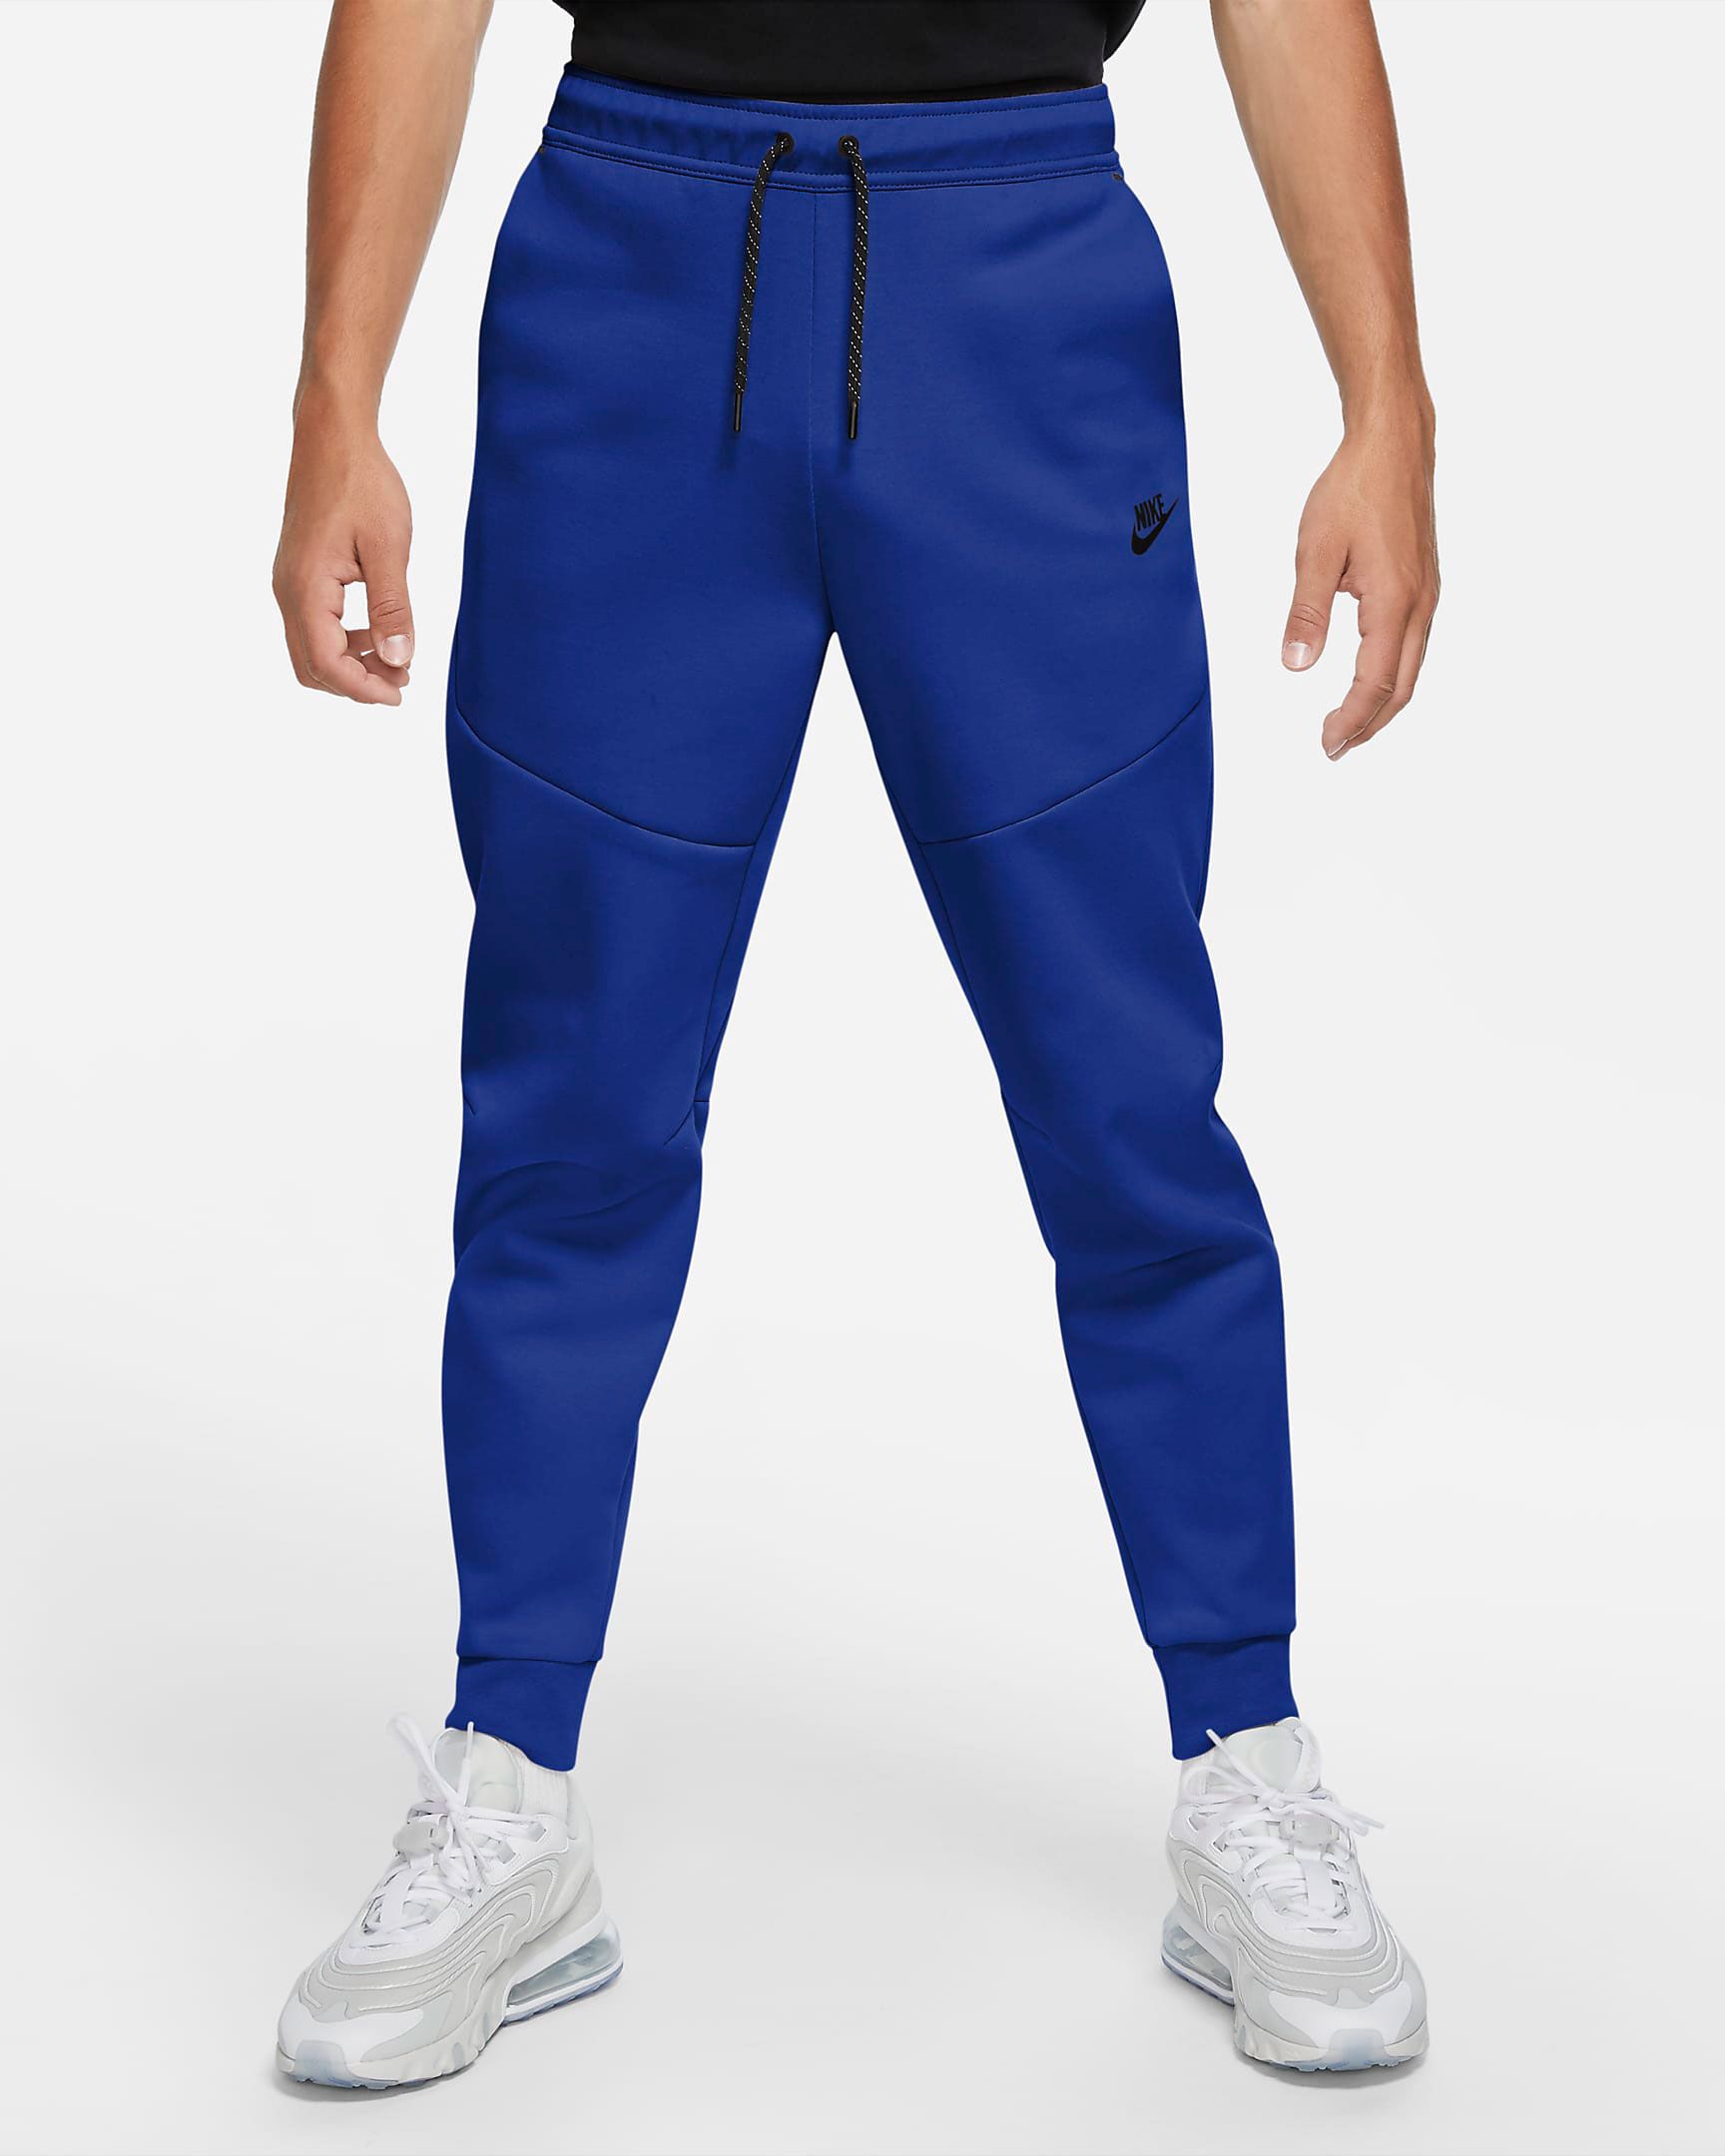 royal blue nike tech fleece pants